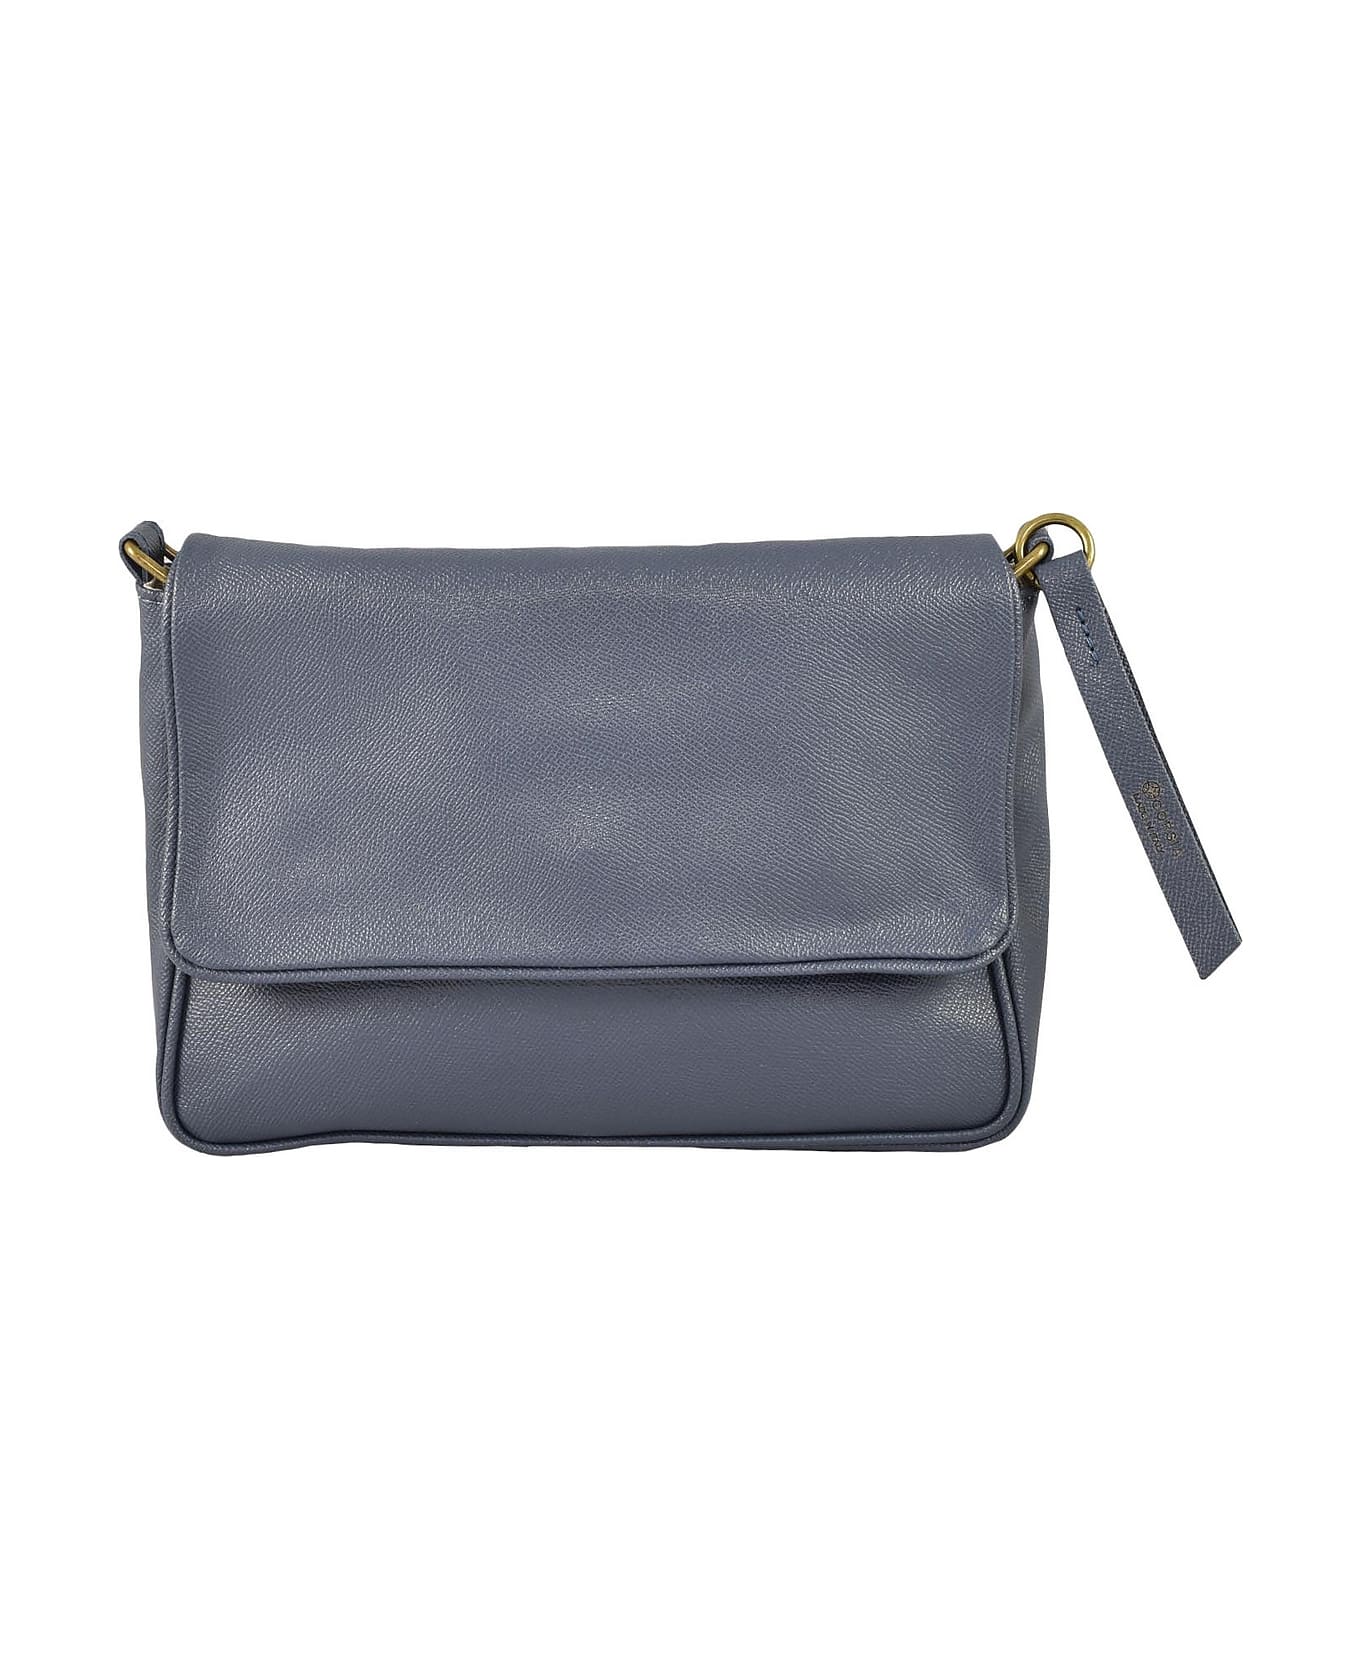 Corsia Women's Blue Handbag - Blue